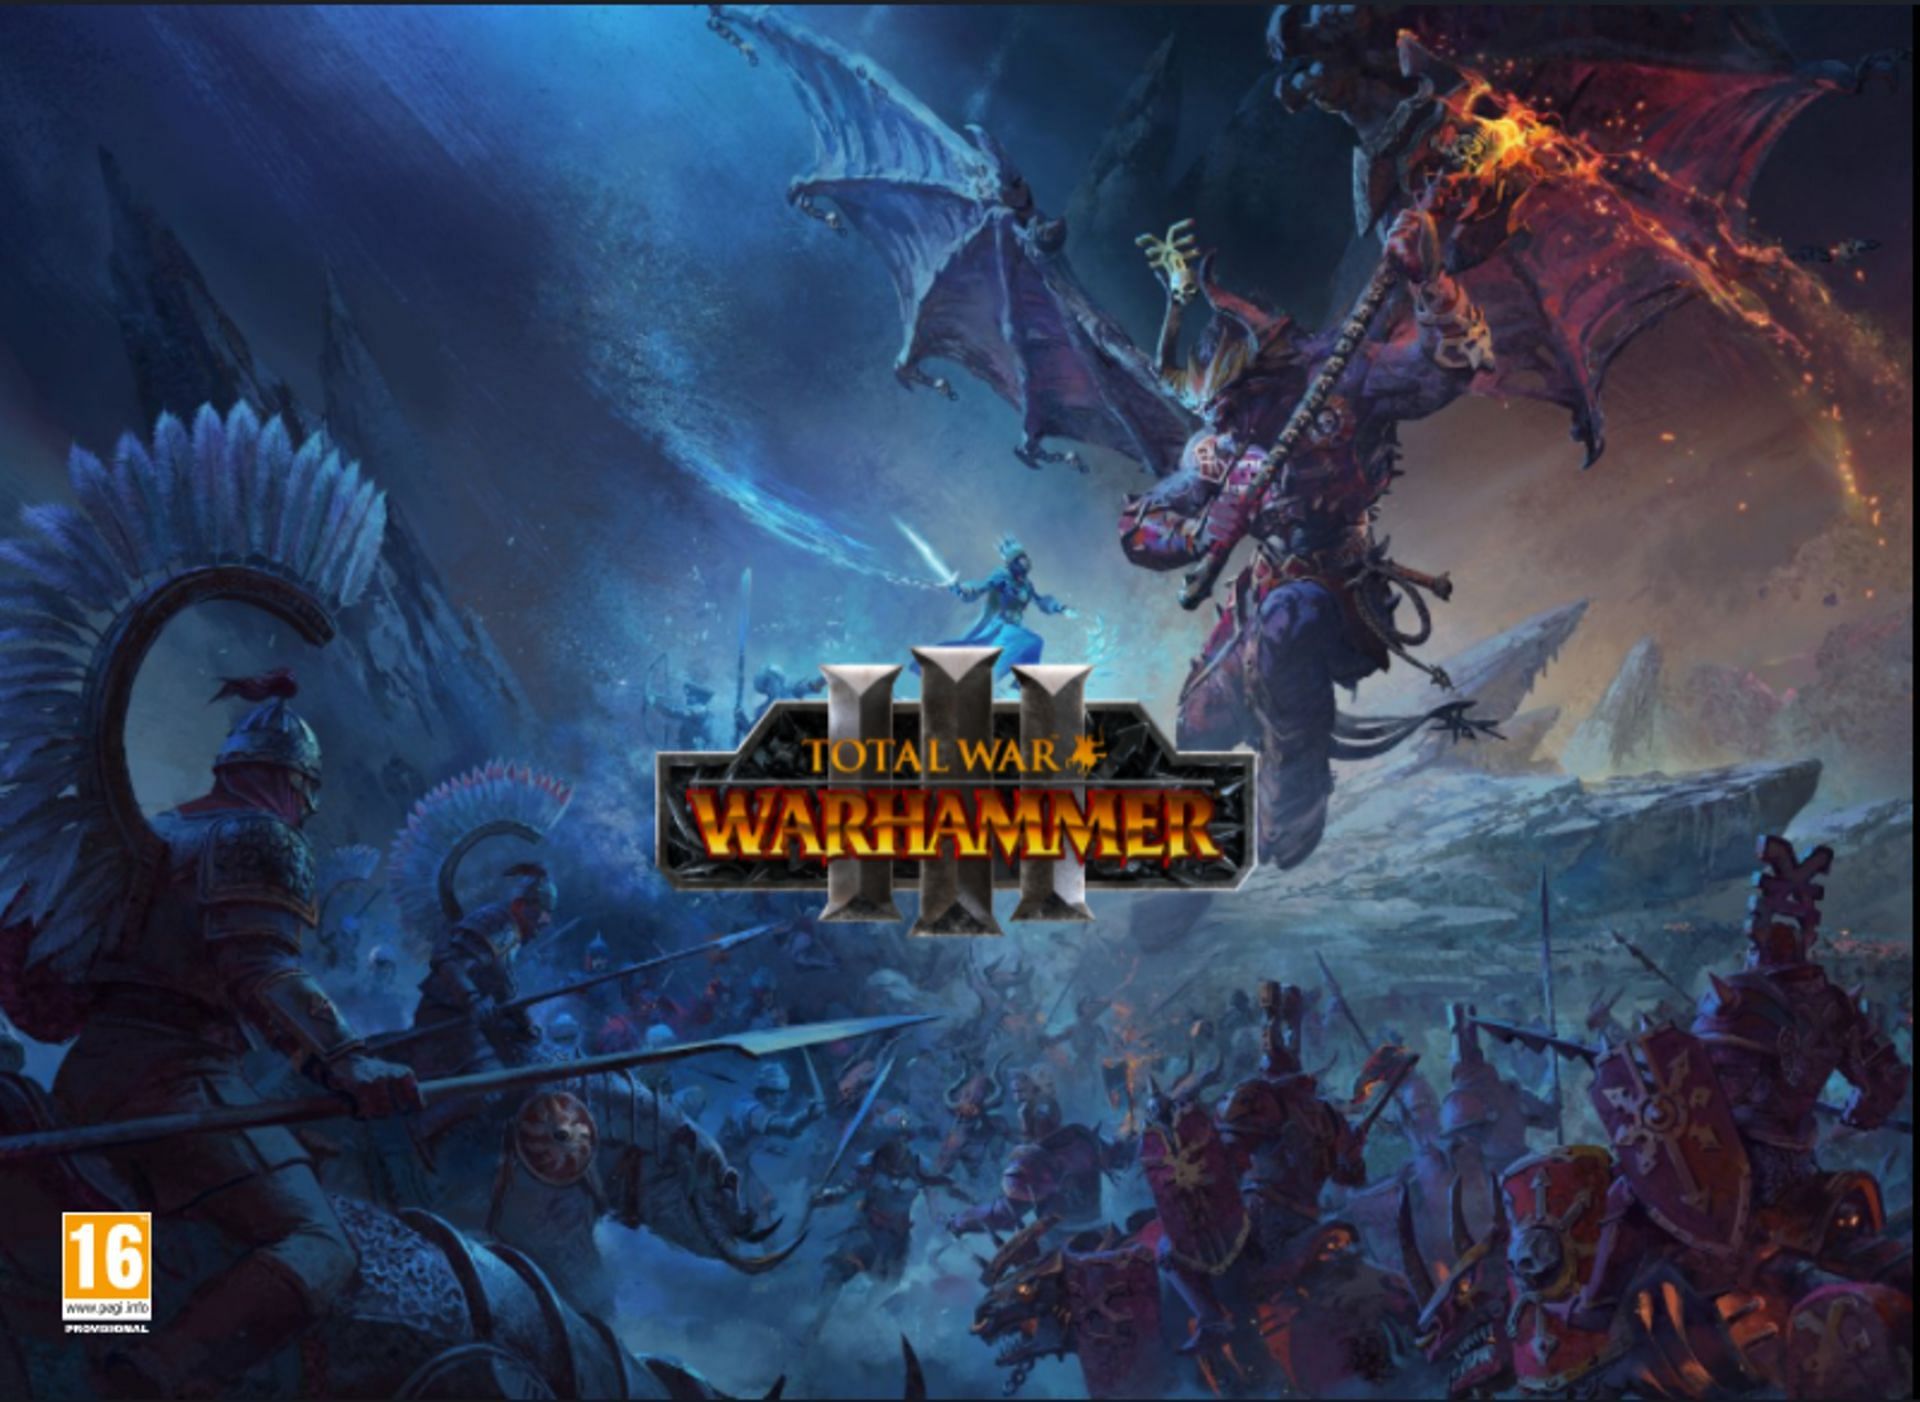 Total War: Warhammer III (Image via Total War)